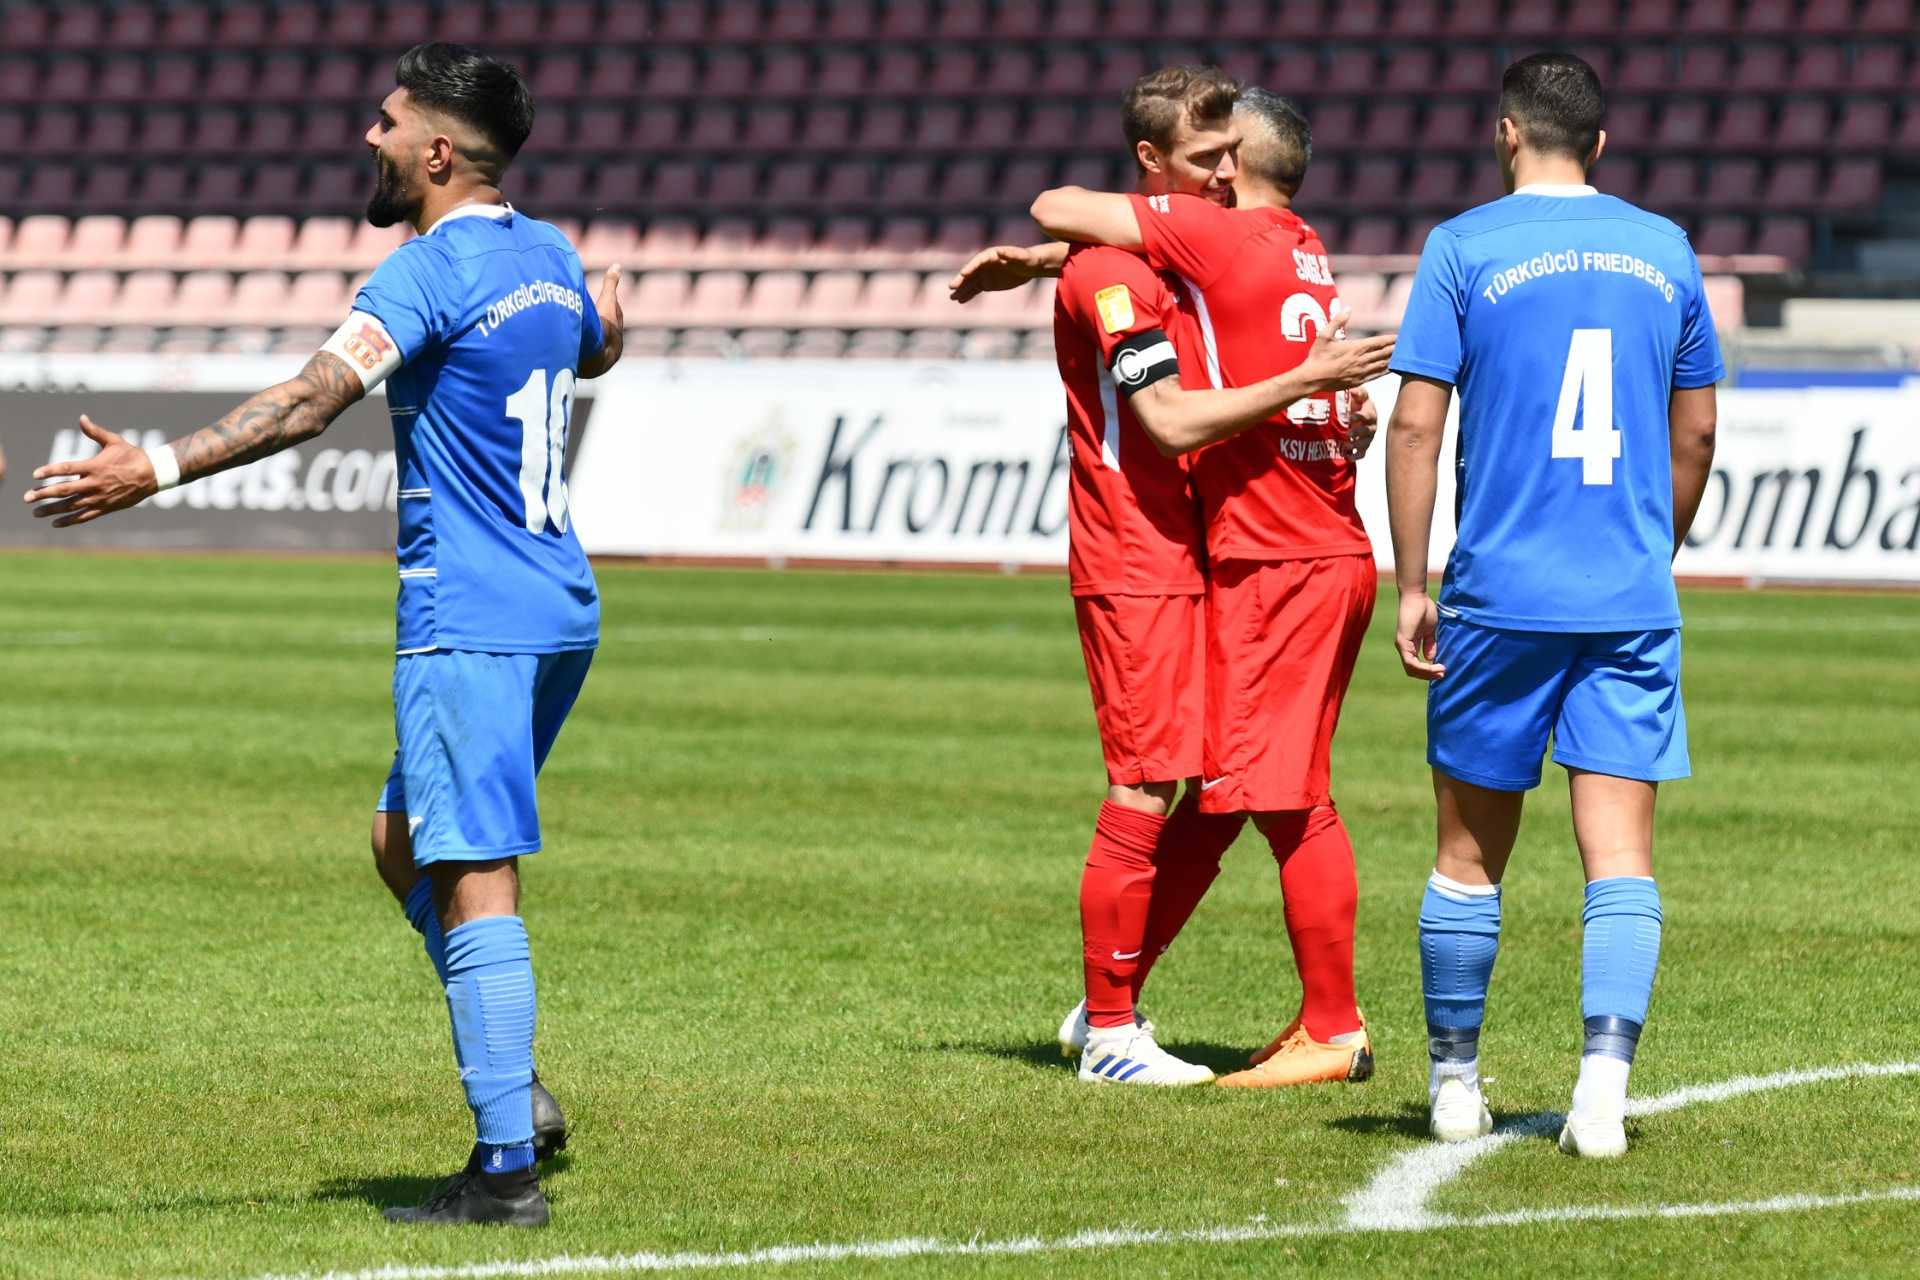 Lotto Hessenliga 2018/2019, KSV Hessen Kassel, Türk Gücü Friedberg, Endstand 4:0, Jubel zum 4:0